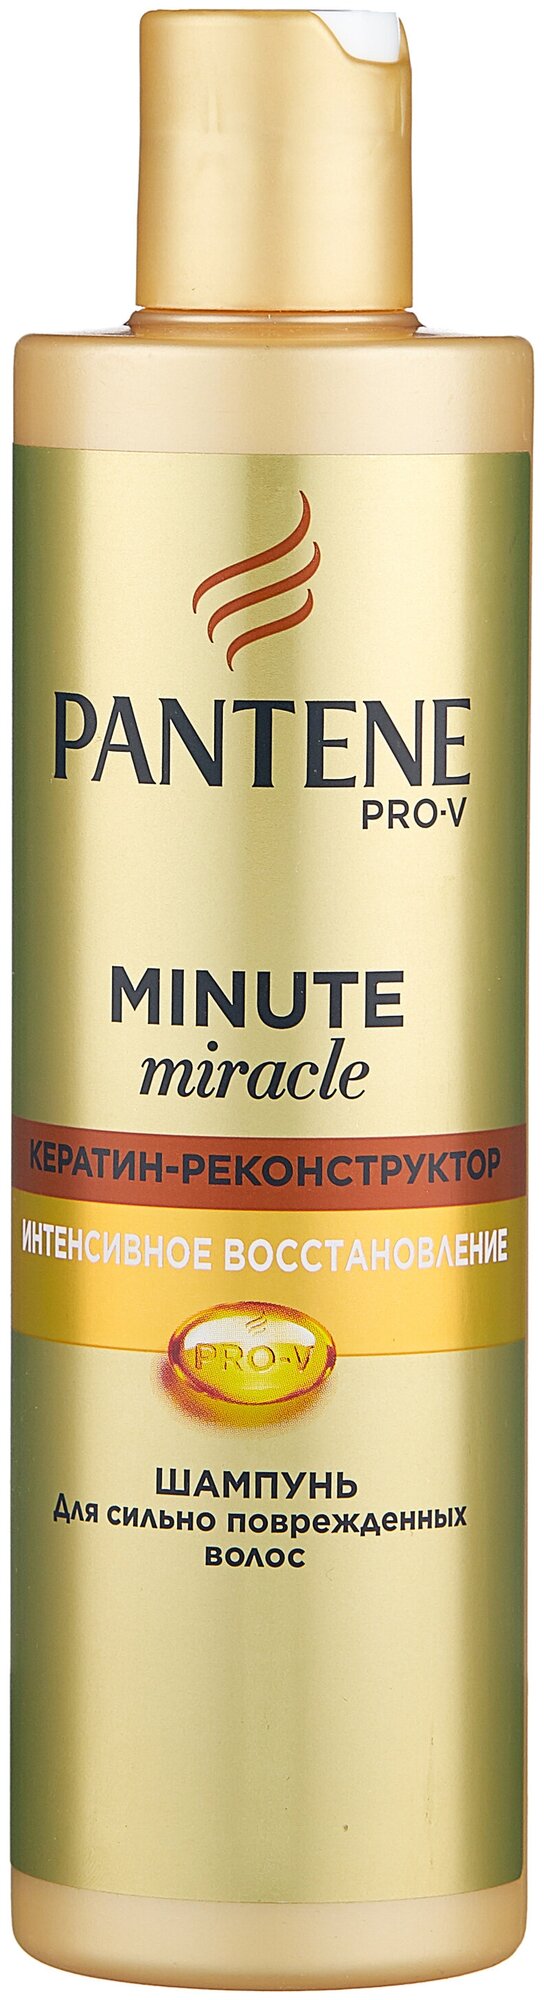 Pantene Pro-V шампунь-реконструктор Minute Miracle Интенсивное восстановление